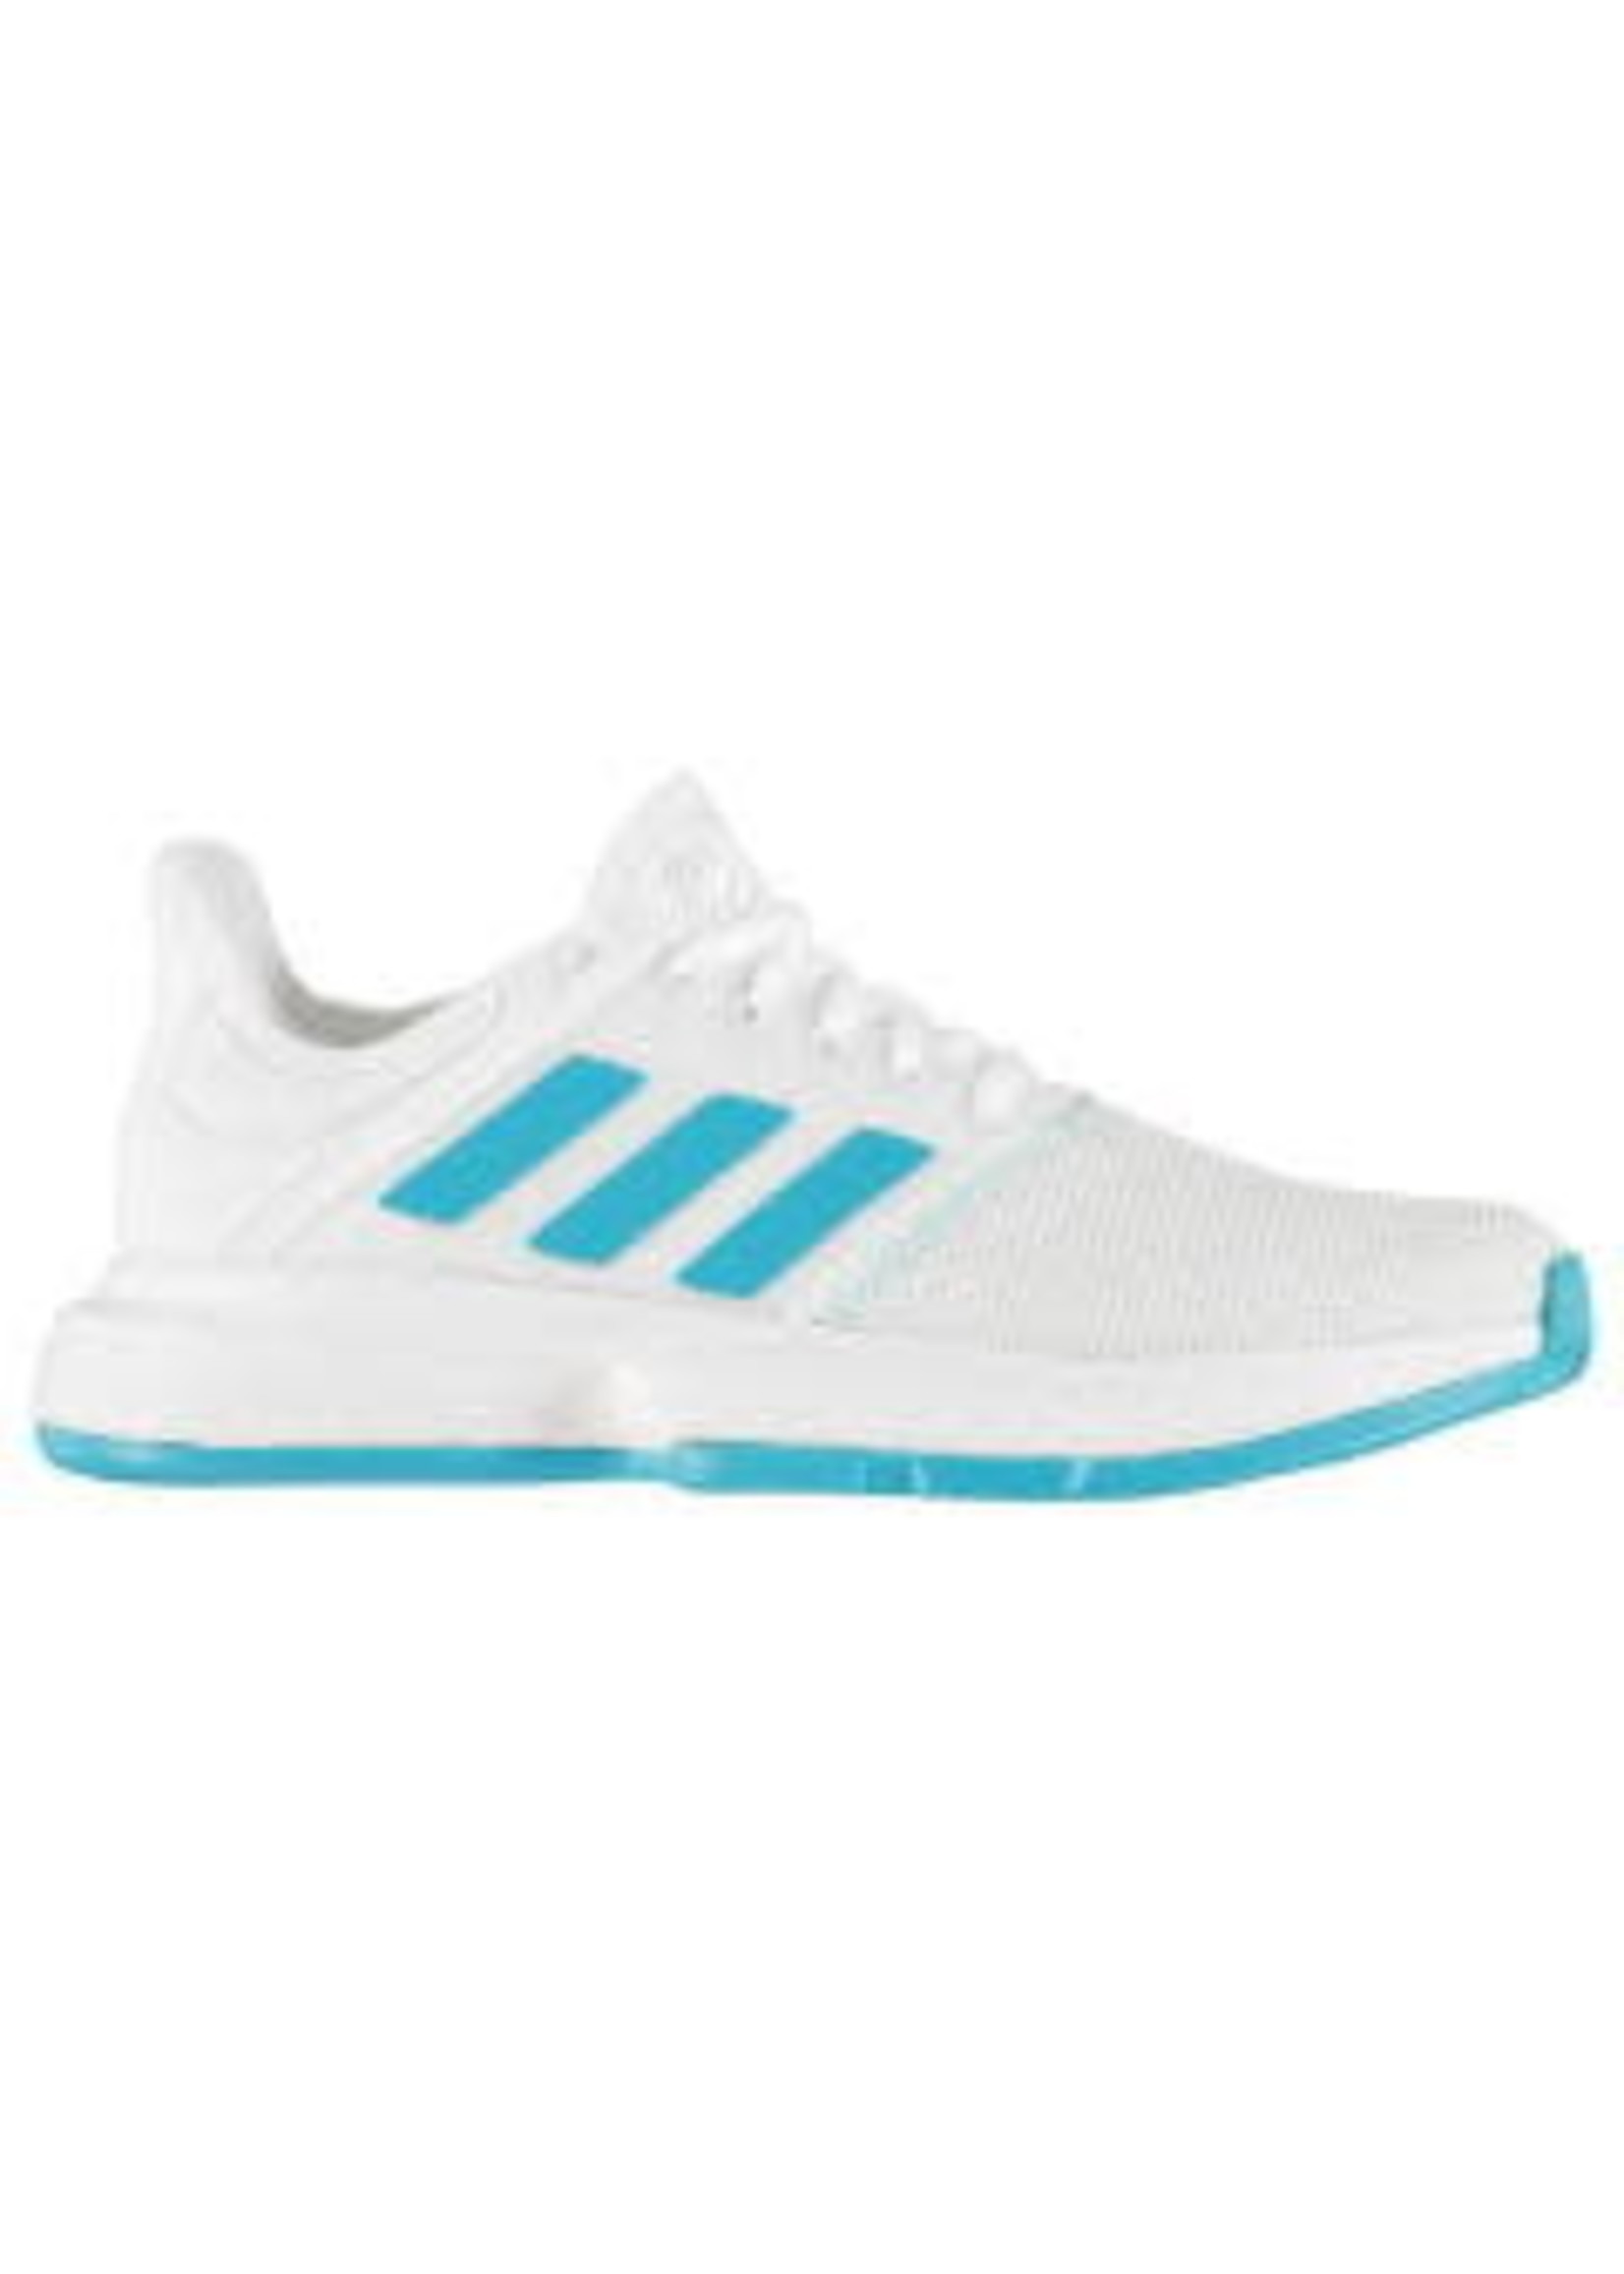 Adidas Adidas Game Court Ladies Tennis Shoes (2019) White/Blue 5.5